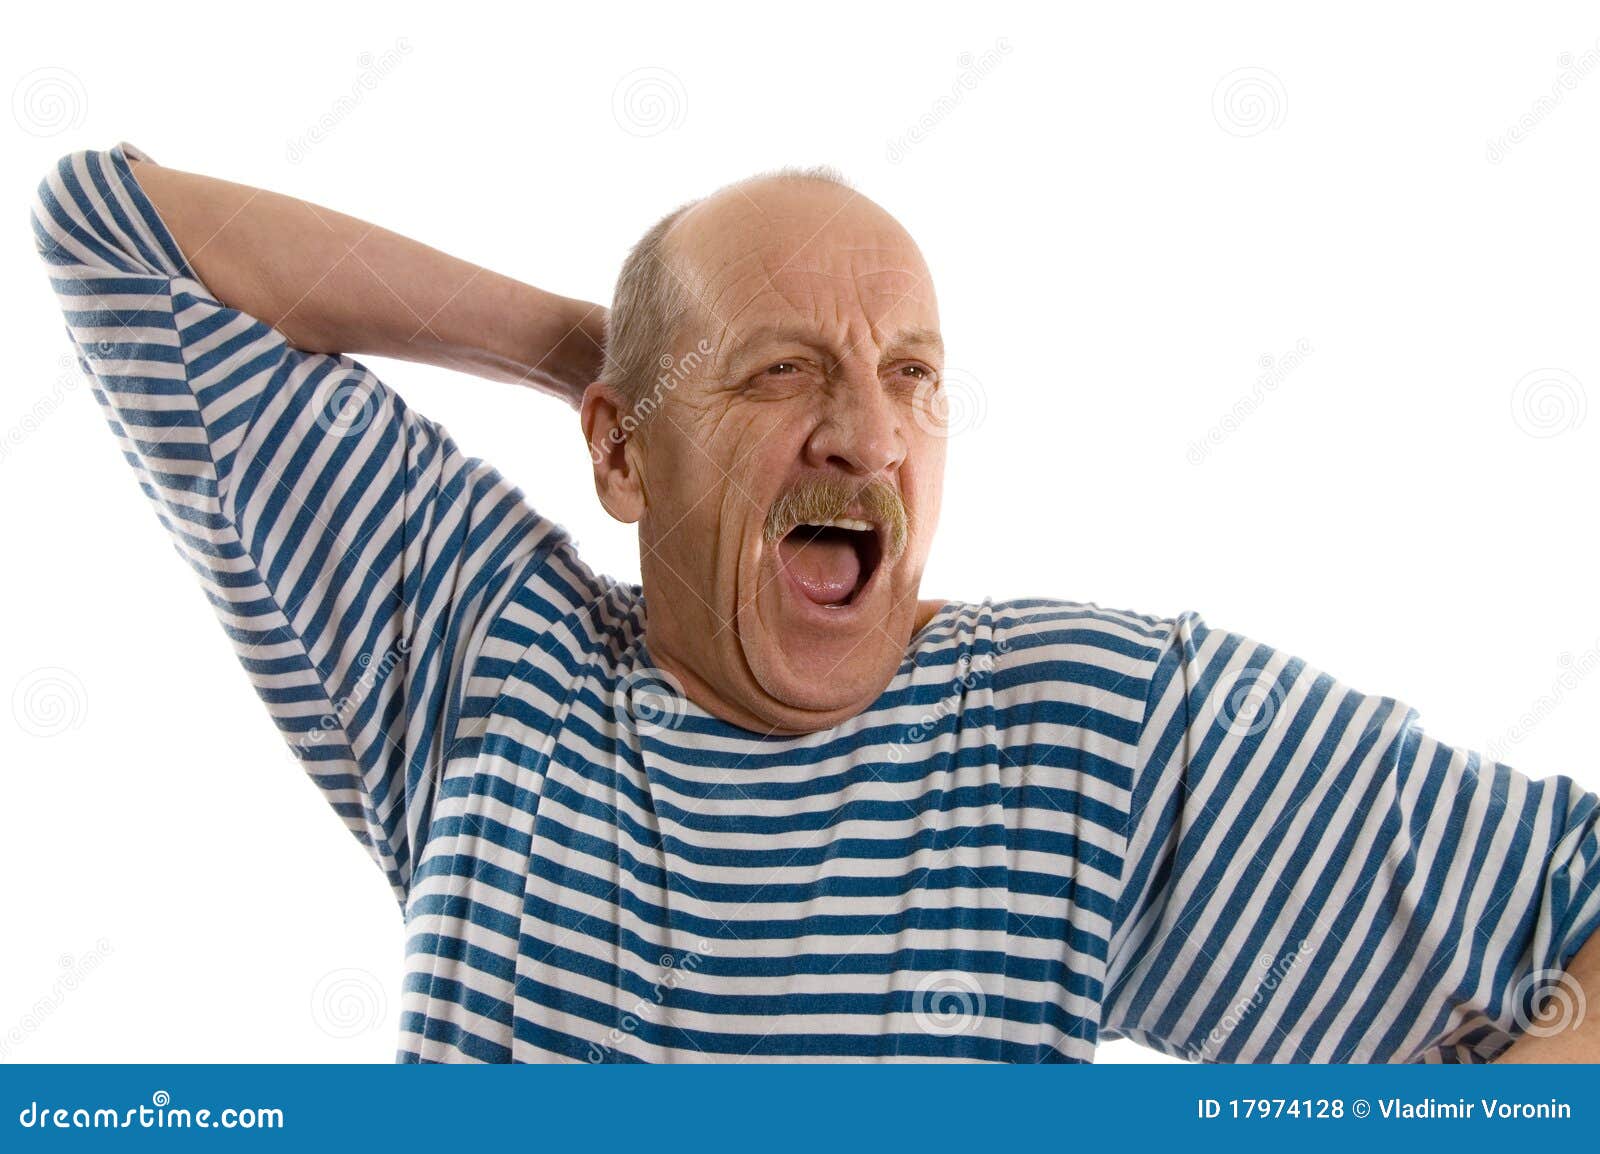 elderly man in a stripped vest yawns